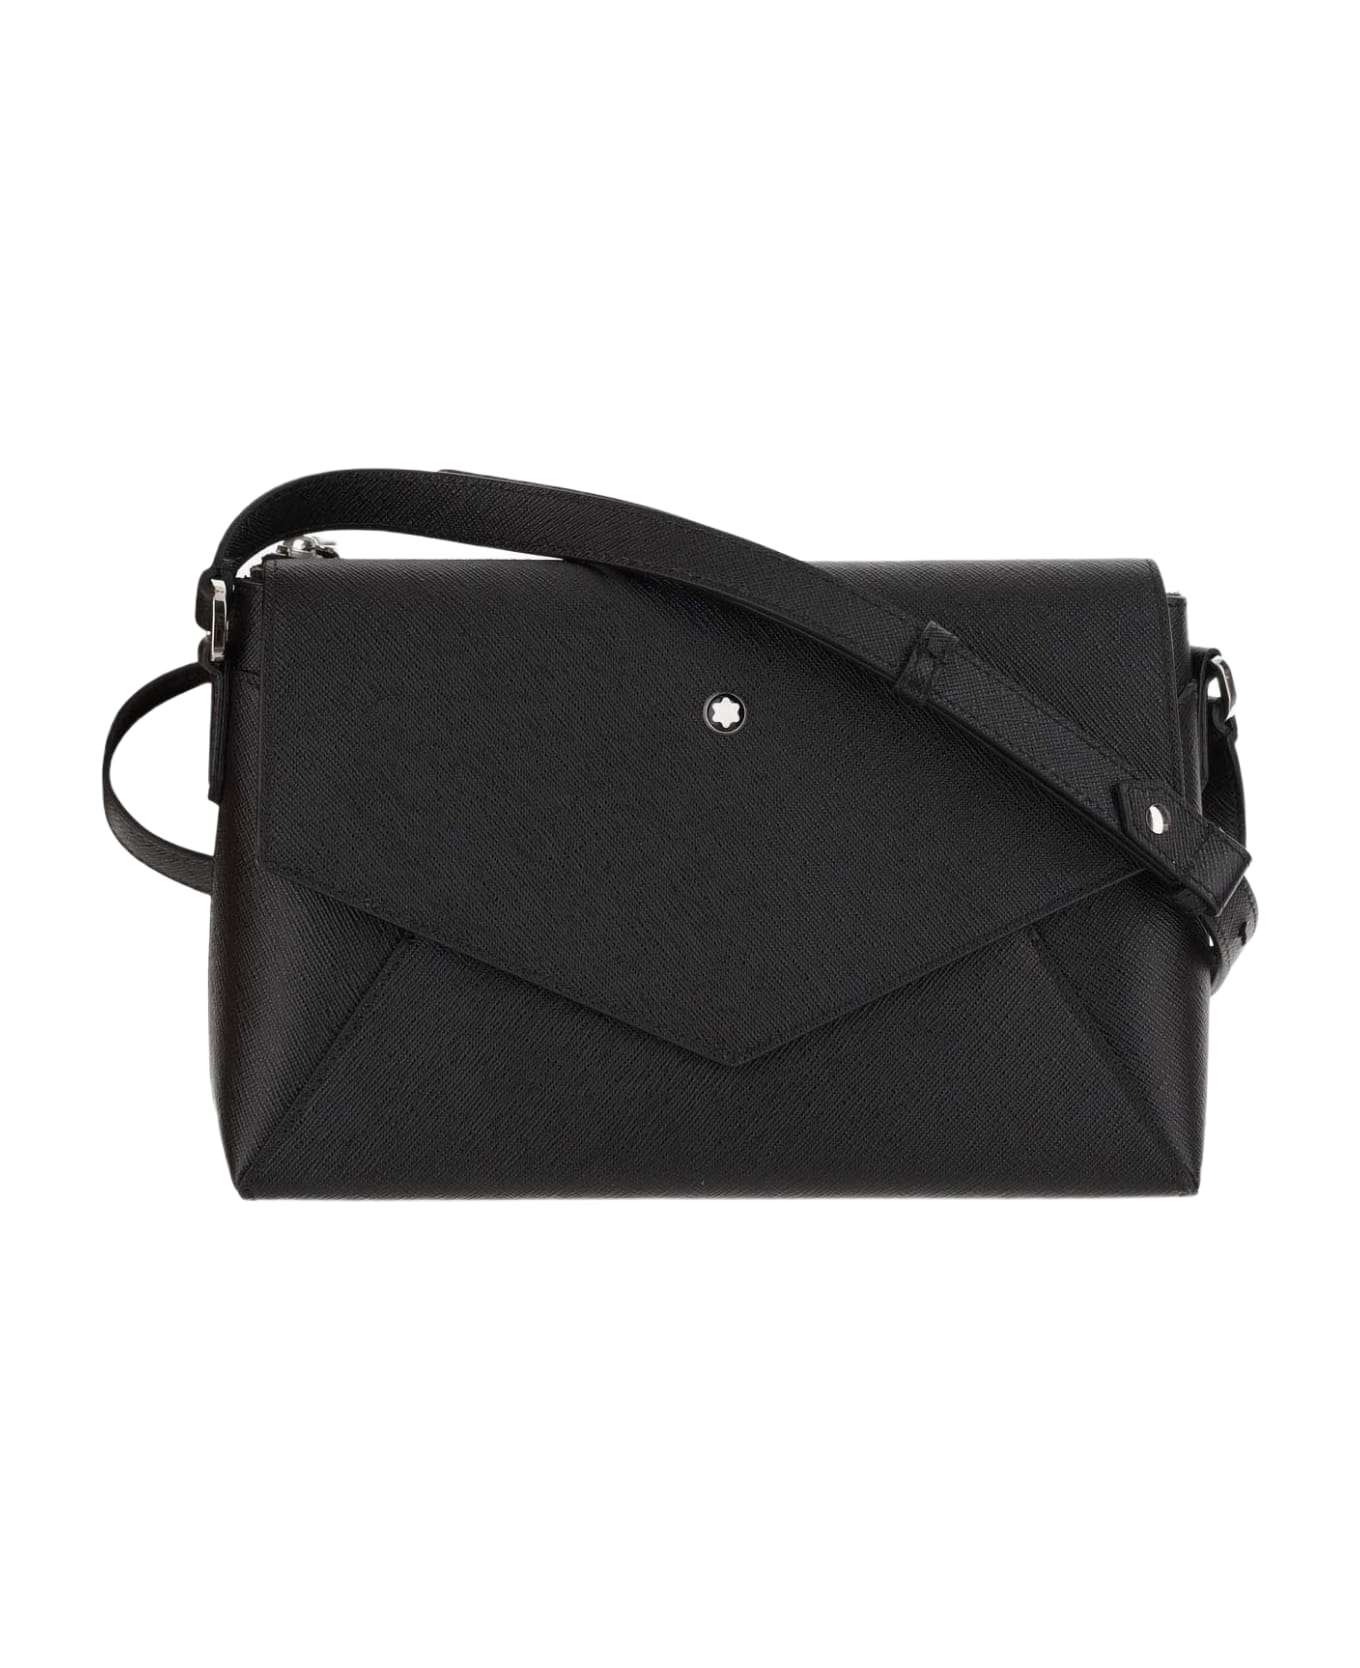 Montblanc Double Sartorial Bag - Black